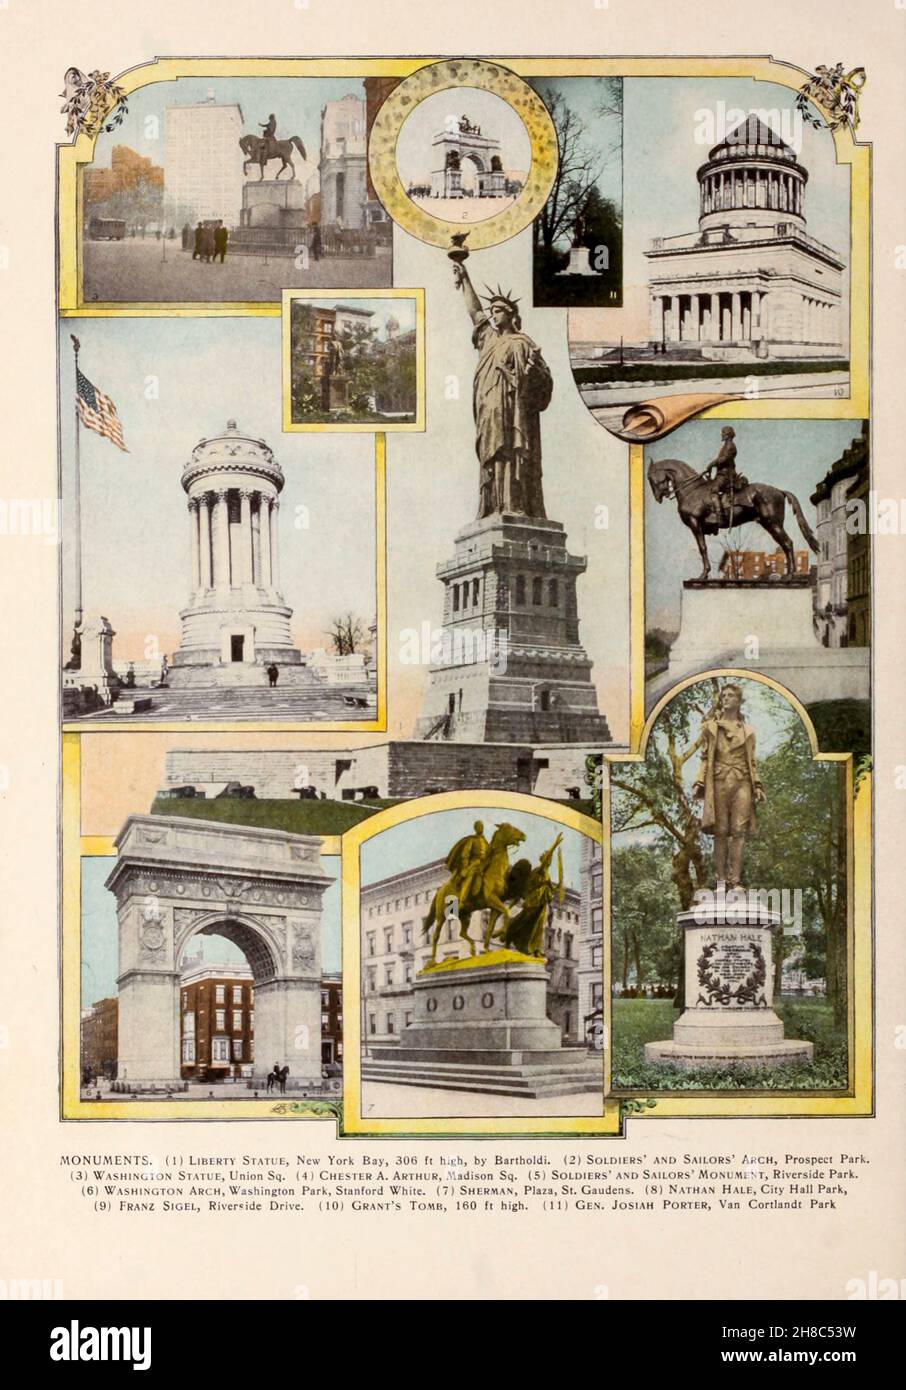 Van Cortlandt Park – History of New York City